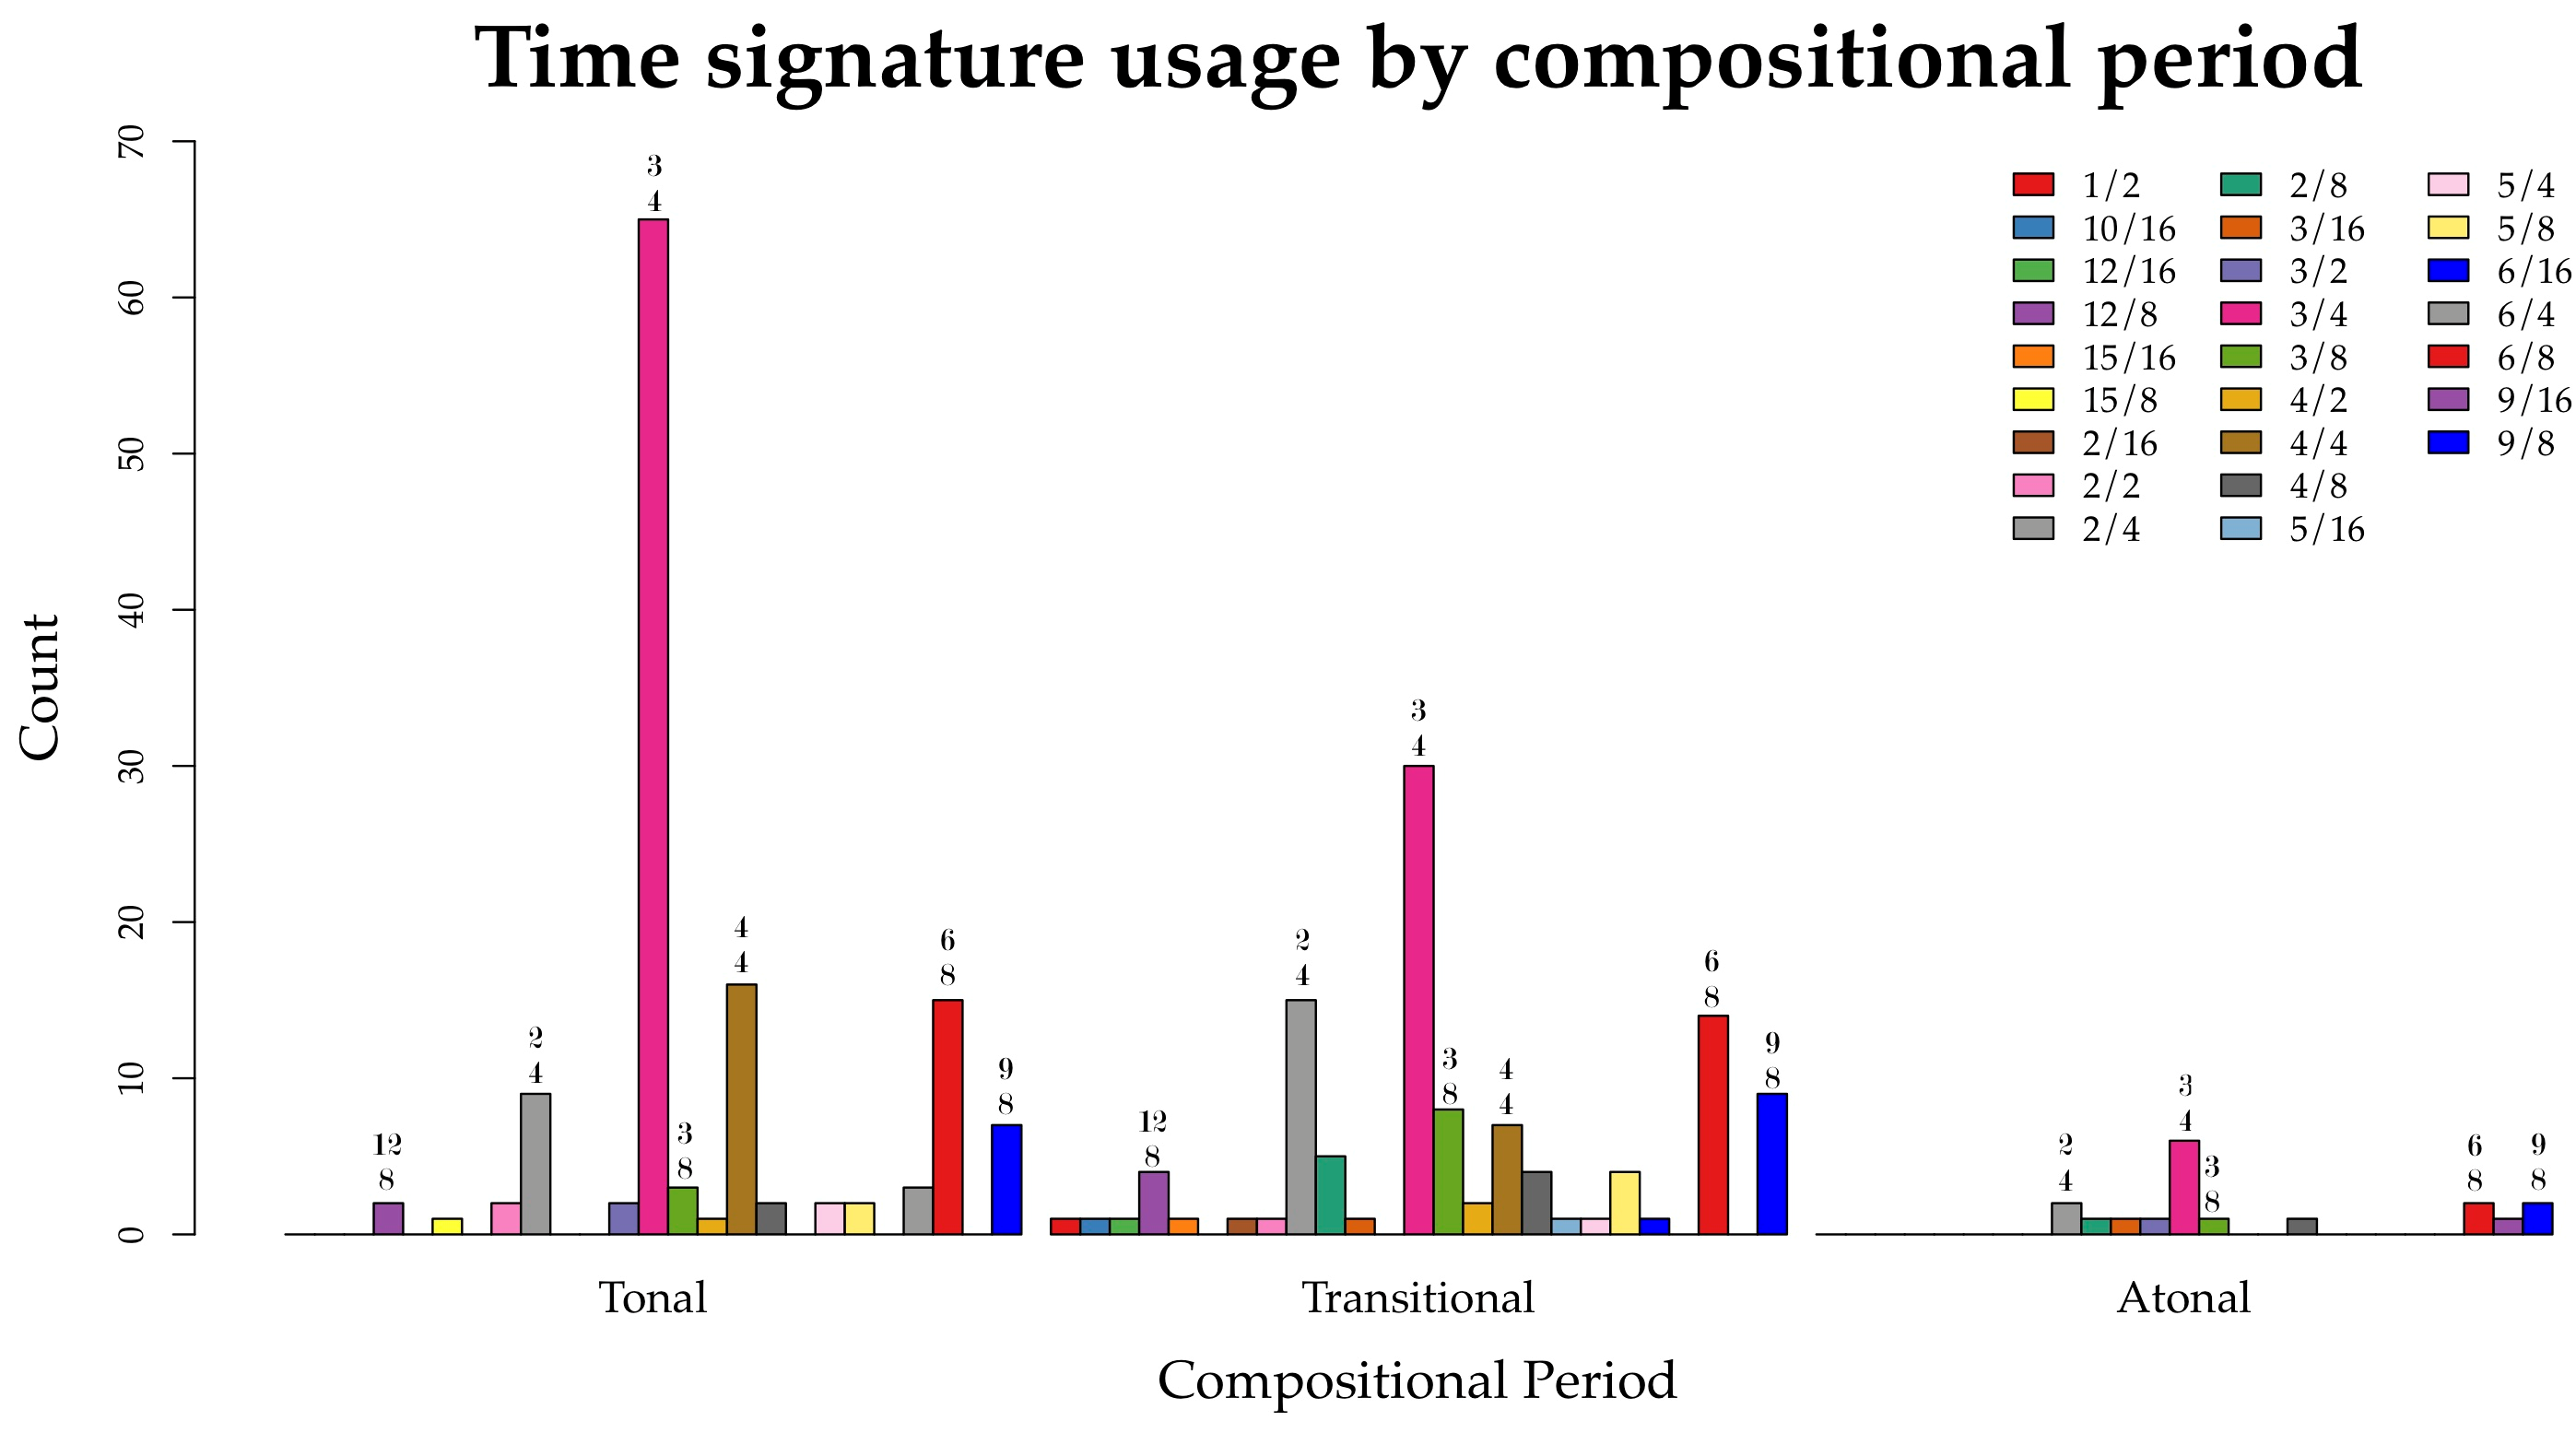 Bar graph showing Time signature usage by compositional period. More description below.